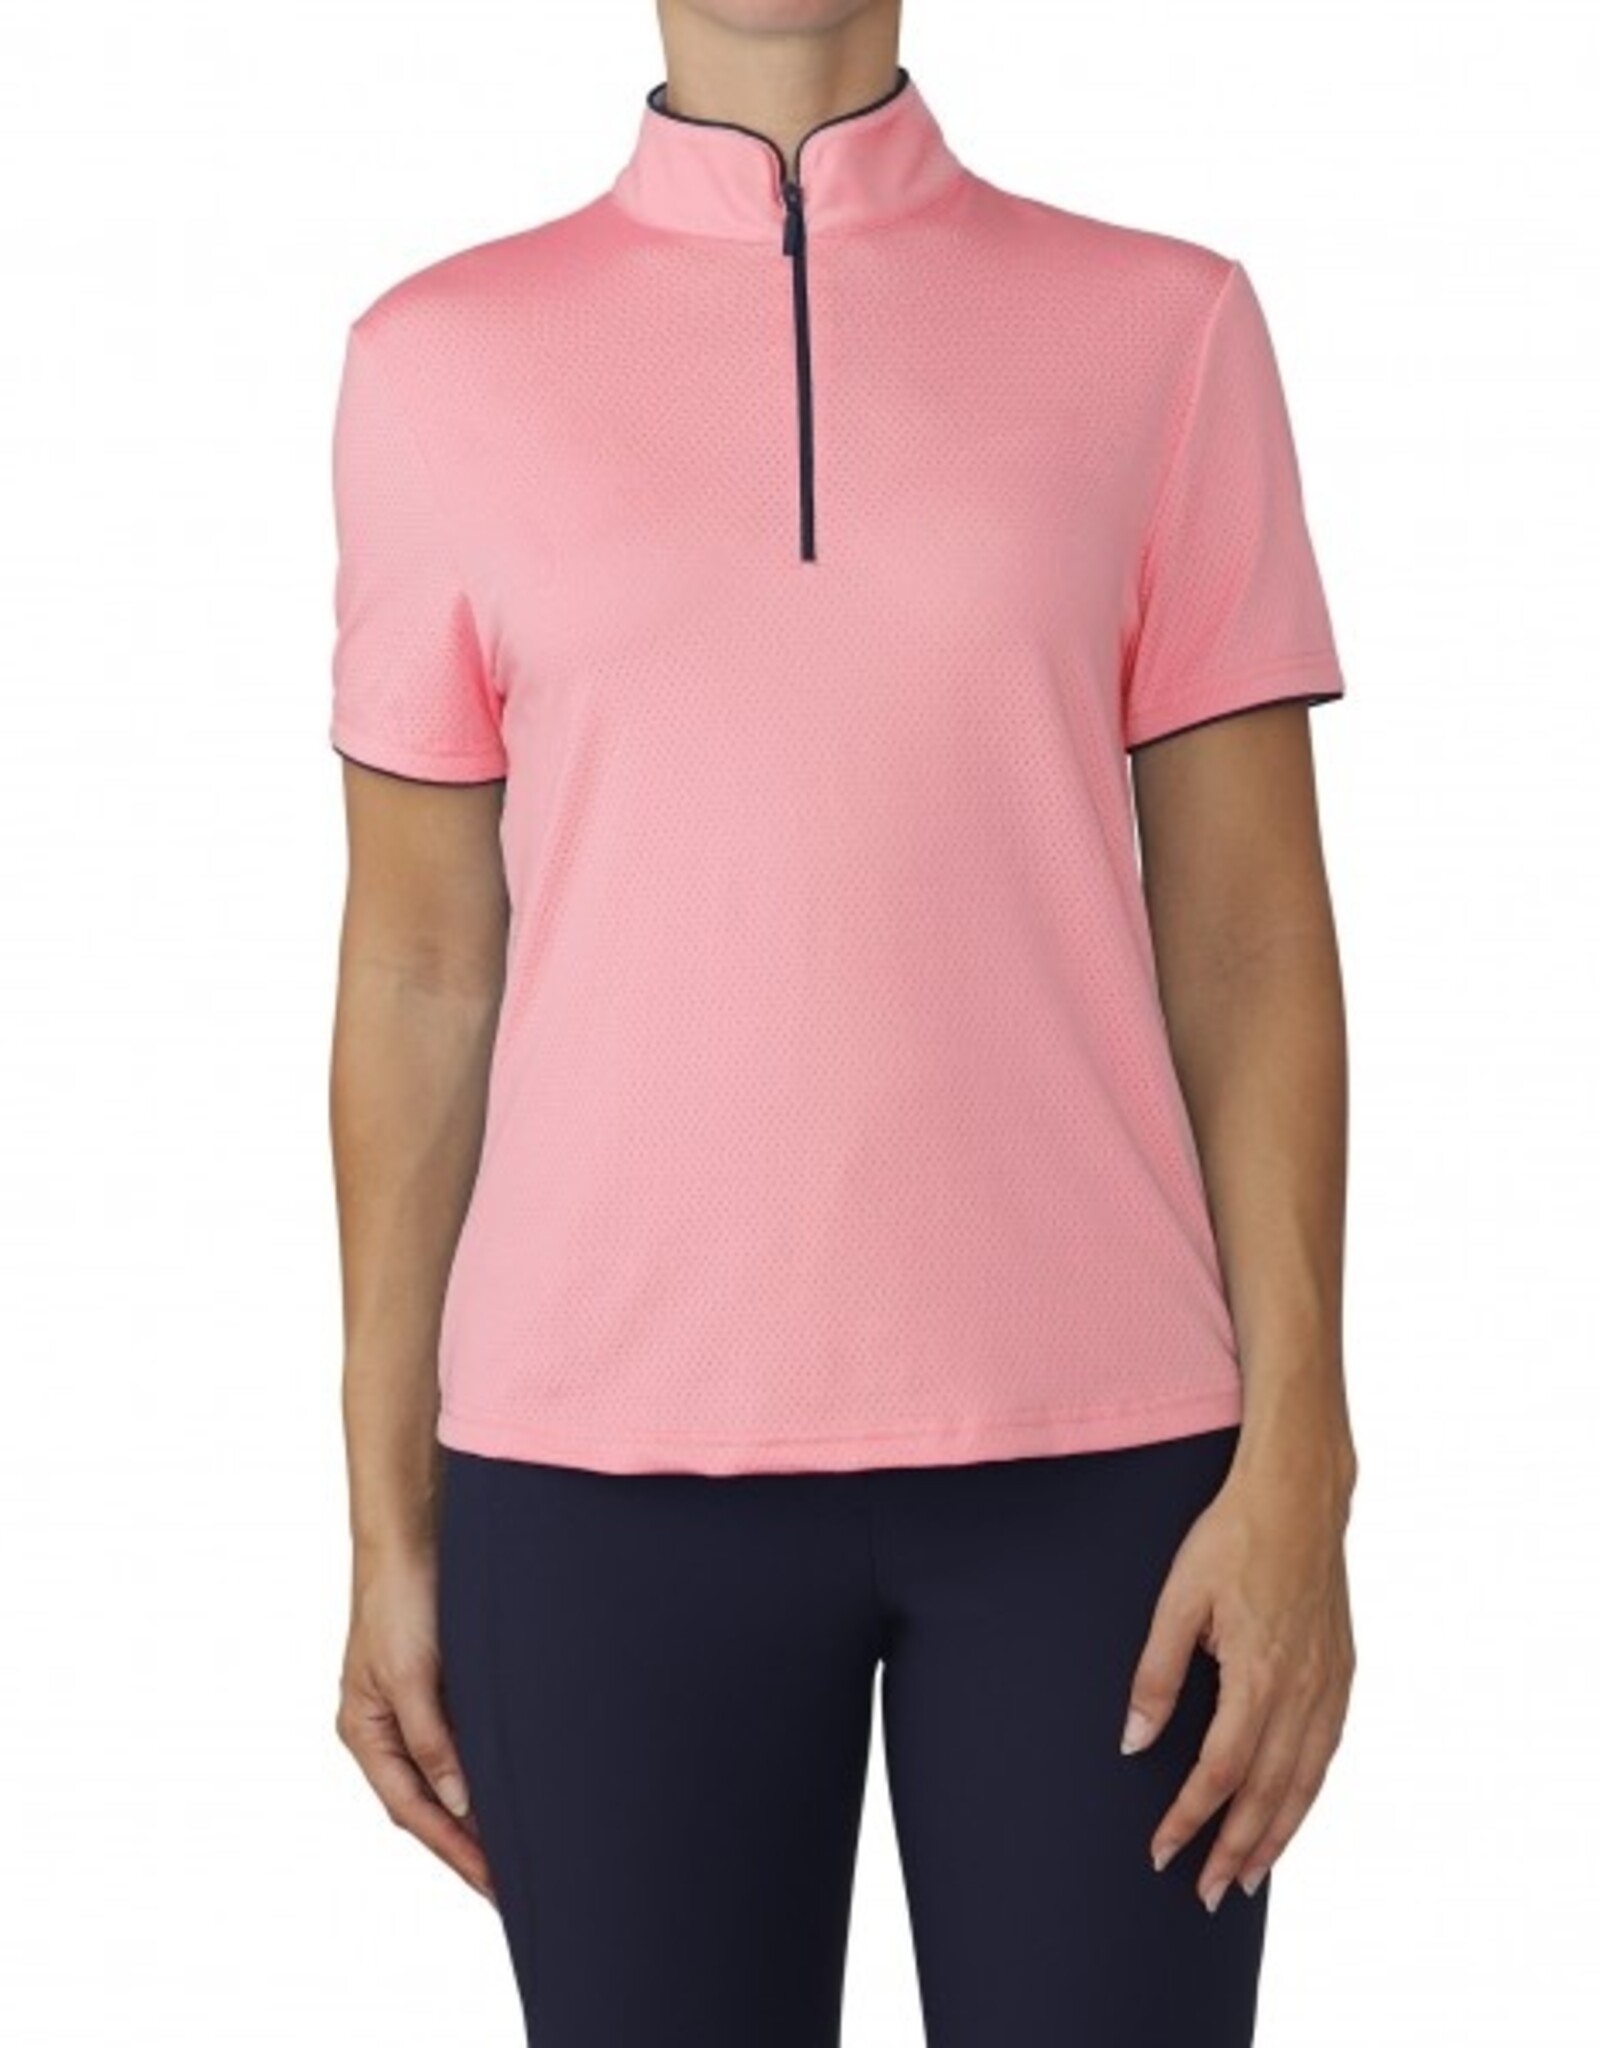 Ovation Ladies' Airflex Sport Short Sleeve Shirt